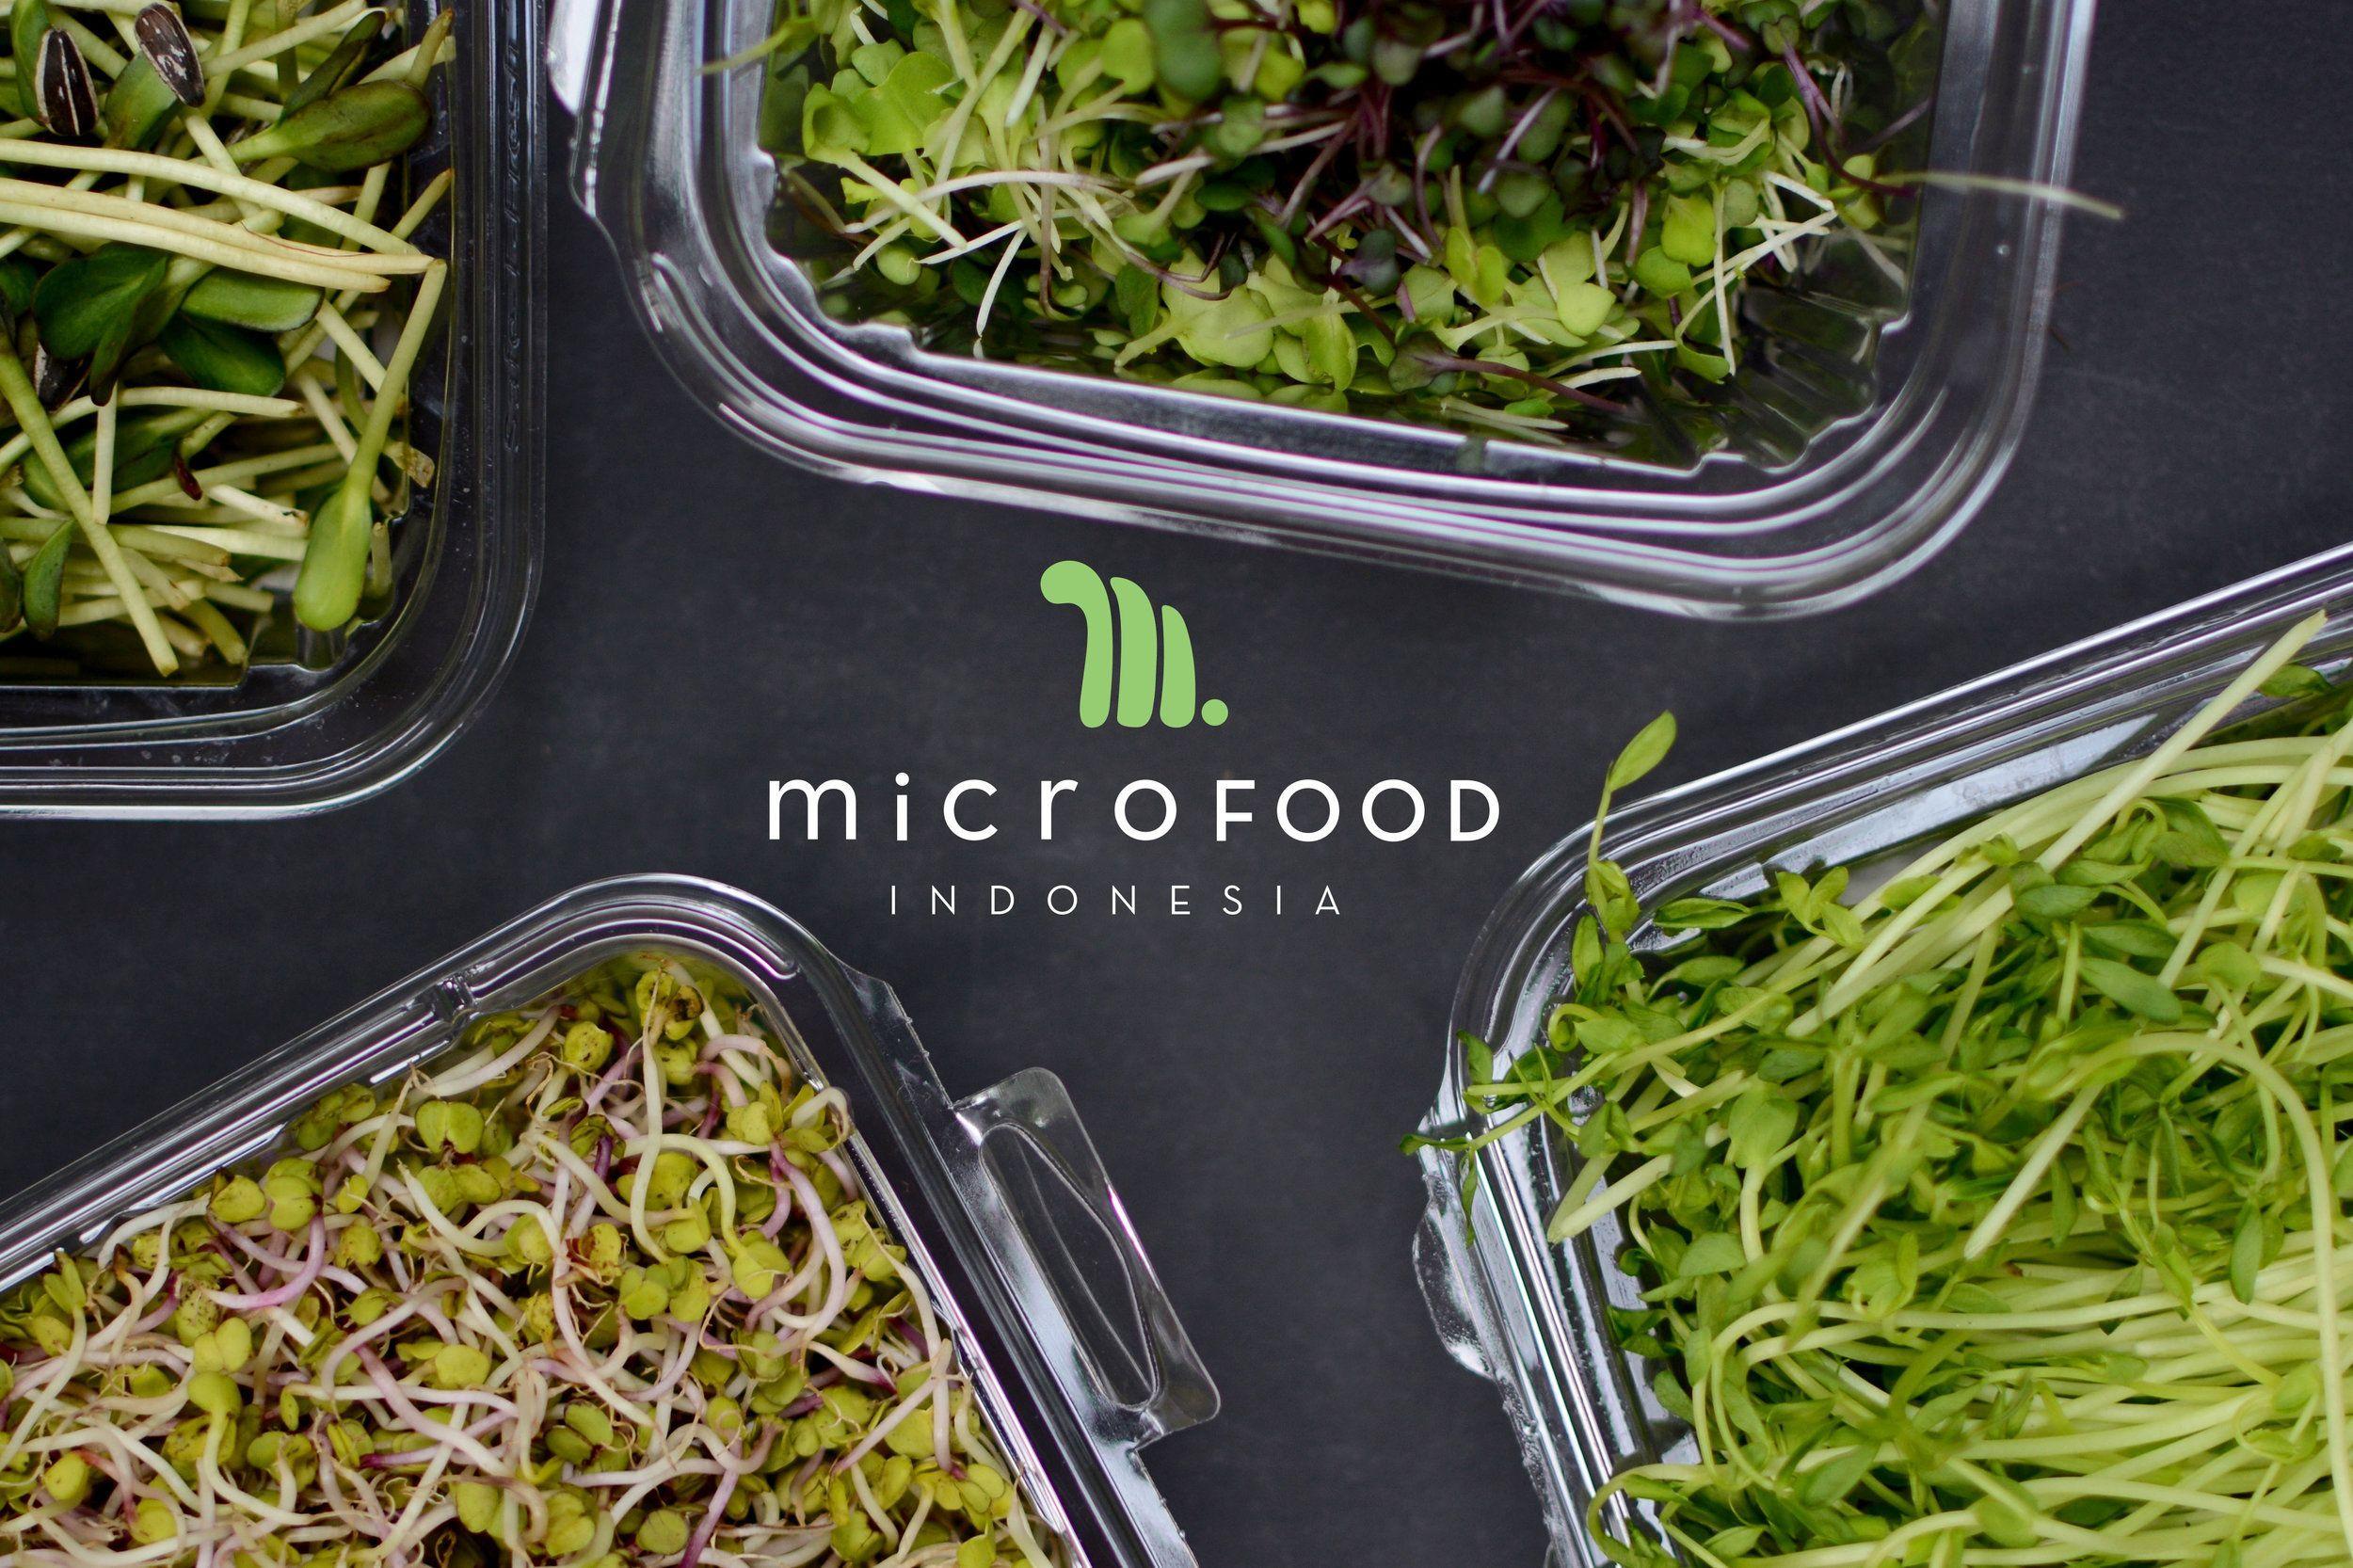 Microgreens Logo - Microfood Logo #logo #logodesign #microgreens